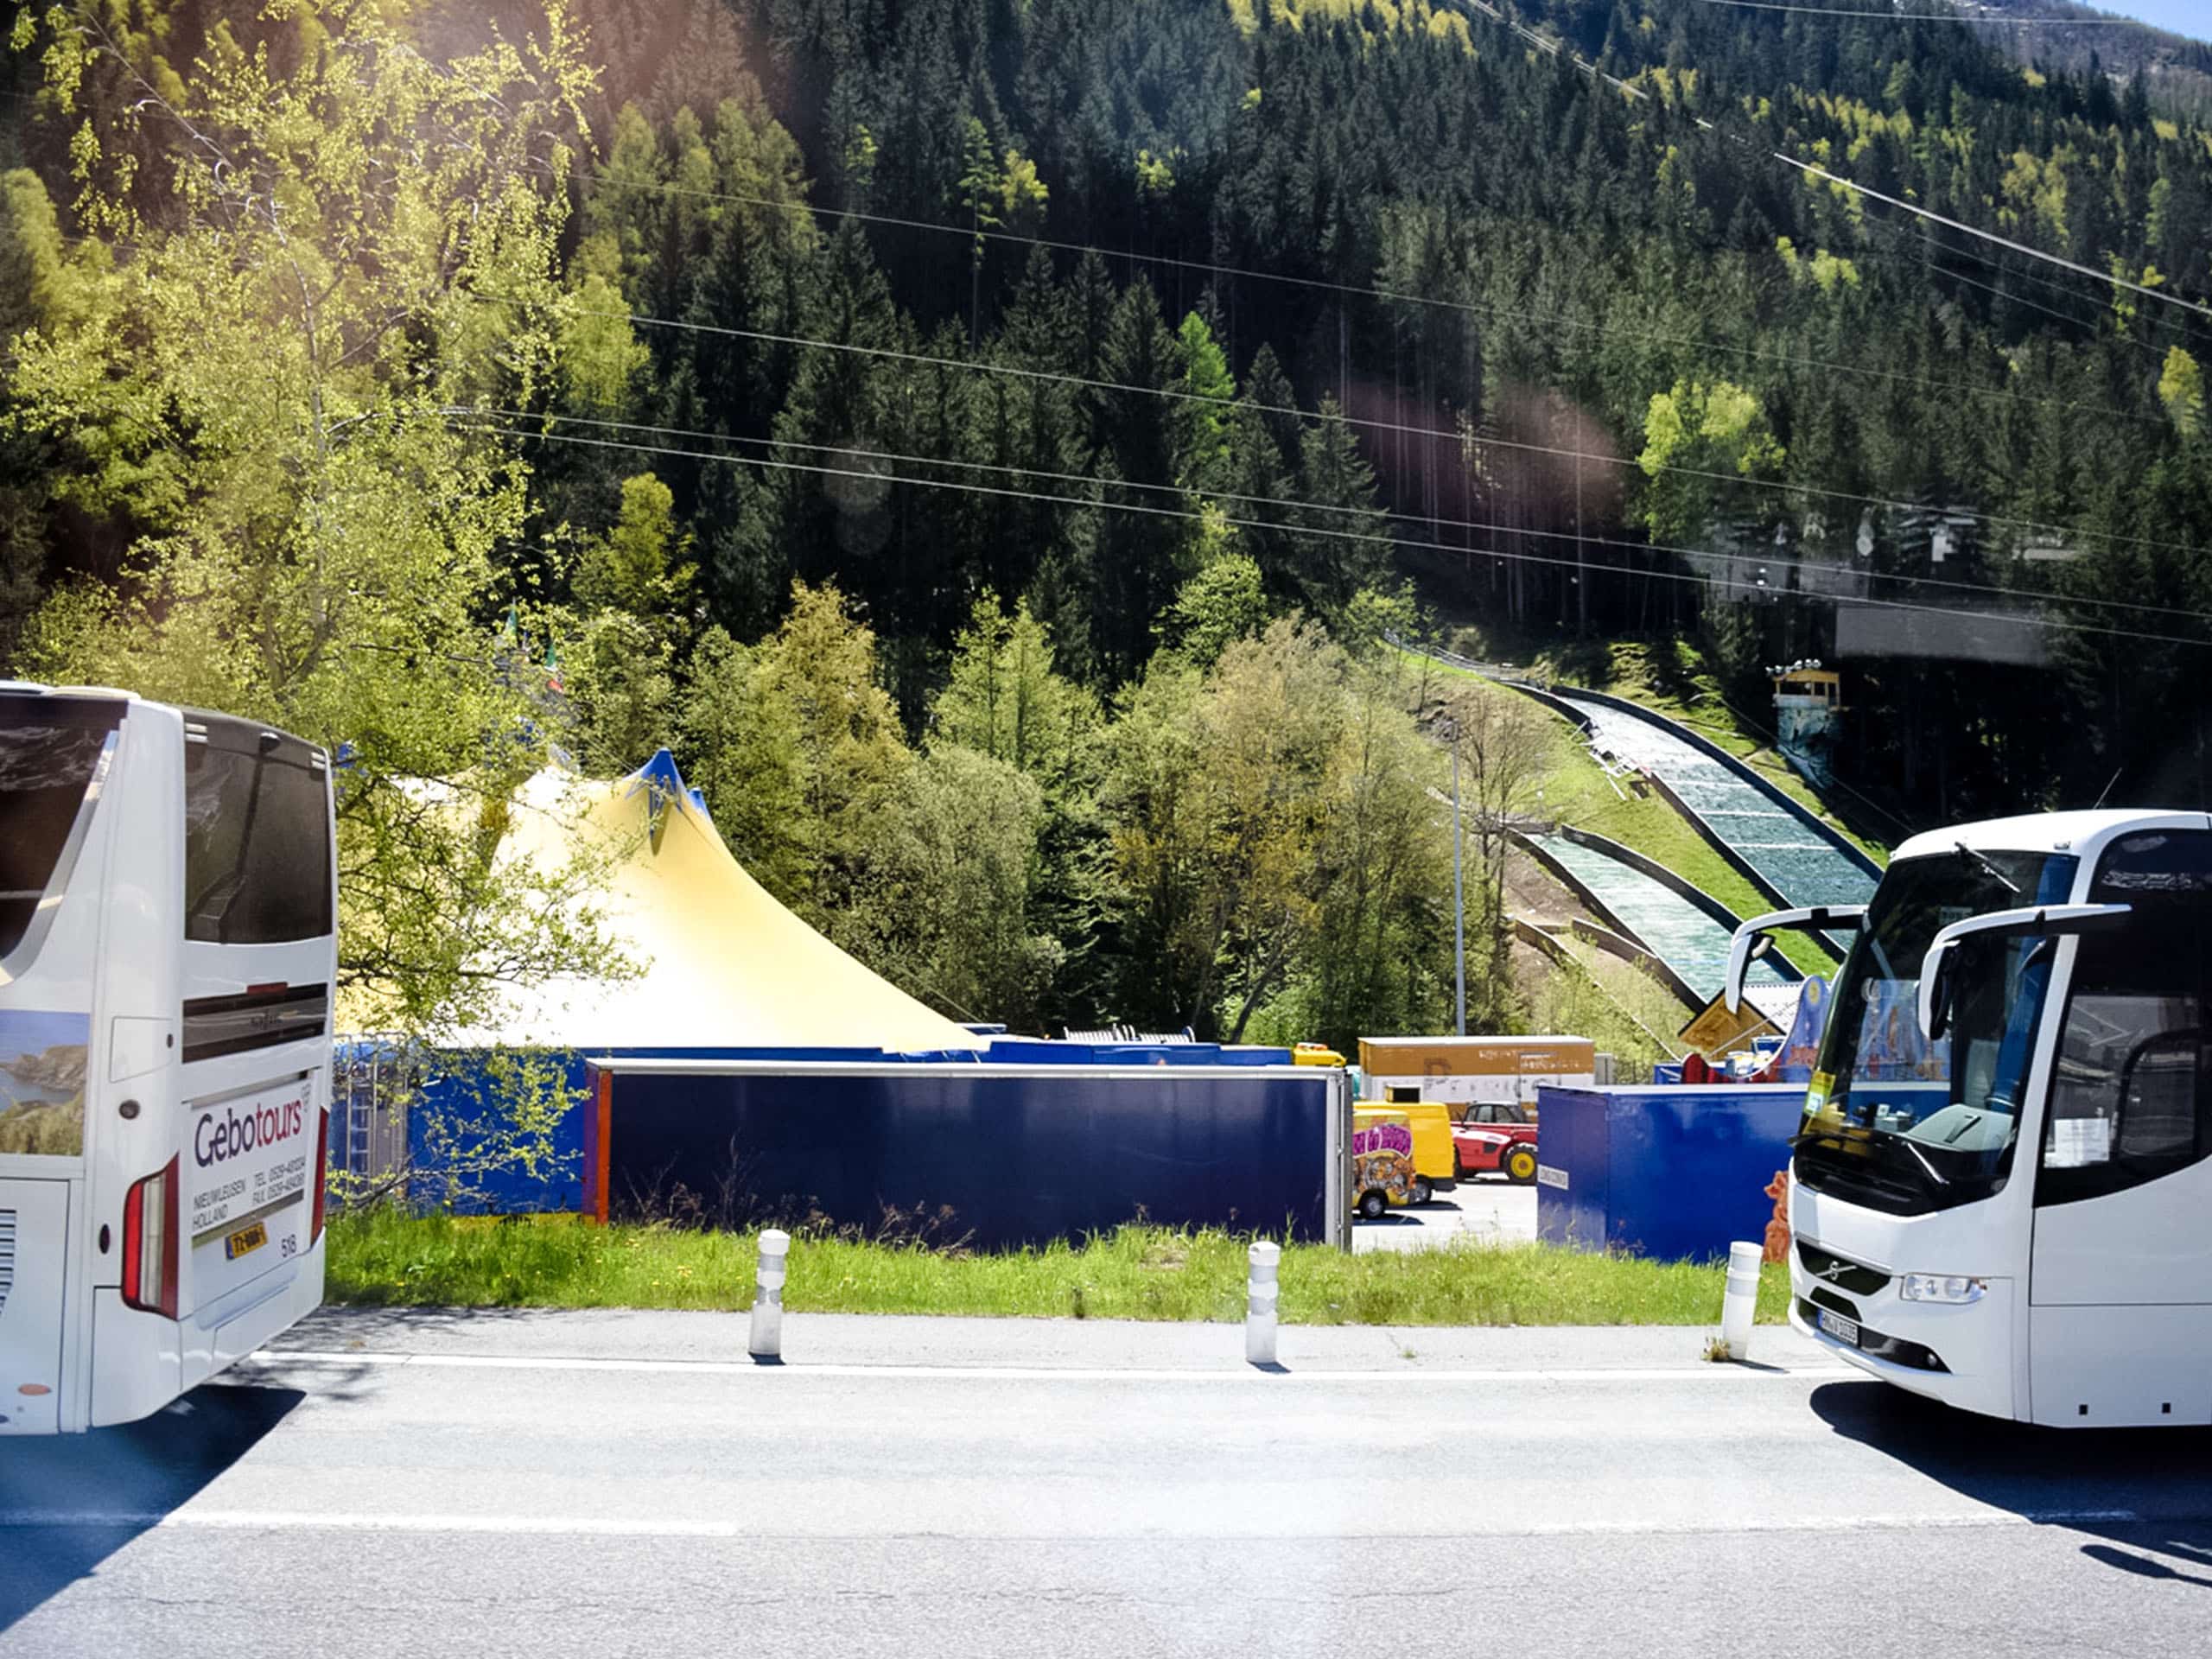 Travel from Geneva International Airport to Chamonix, then back to Geneva once you reach Zermatt